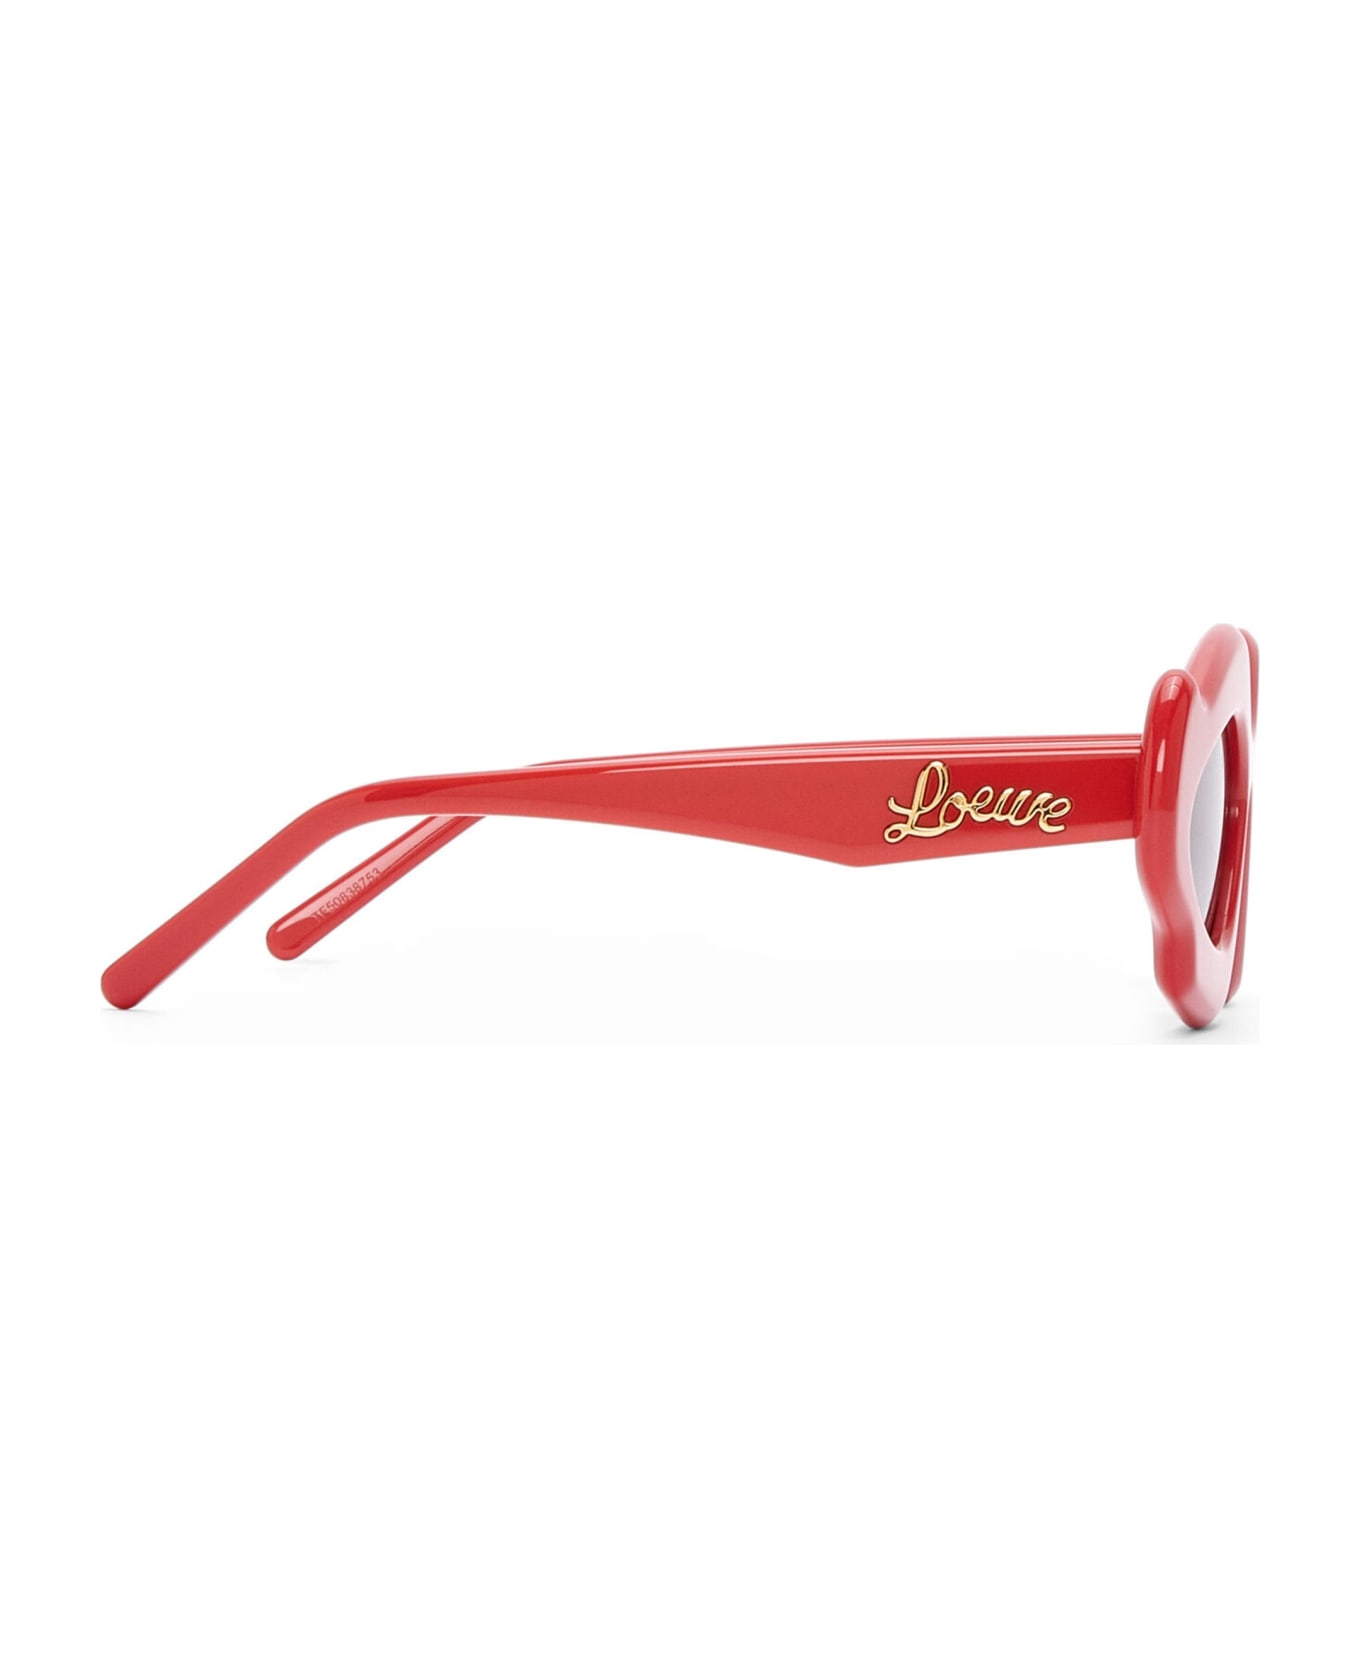 Loewe Lw40109u - Red Sunglasses - red